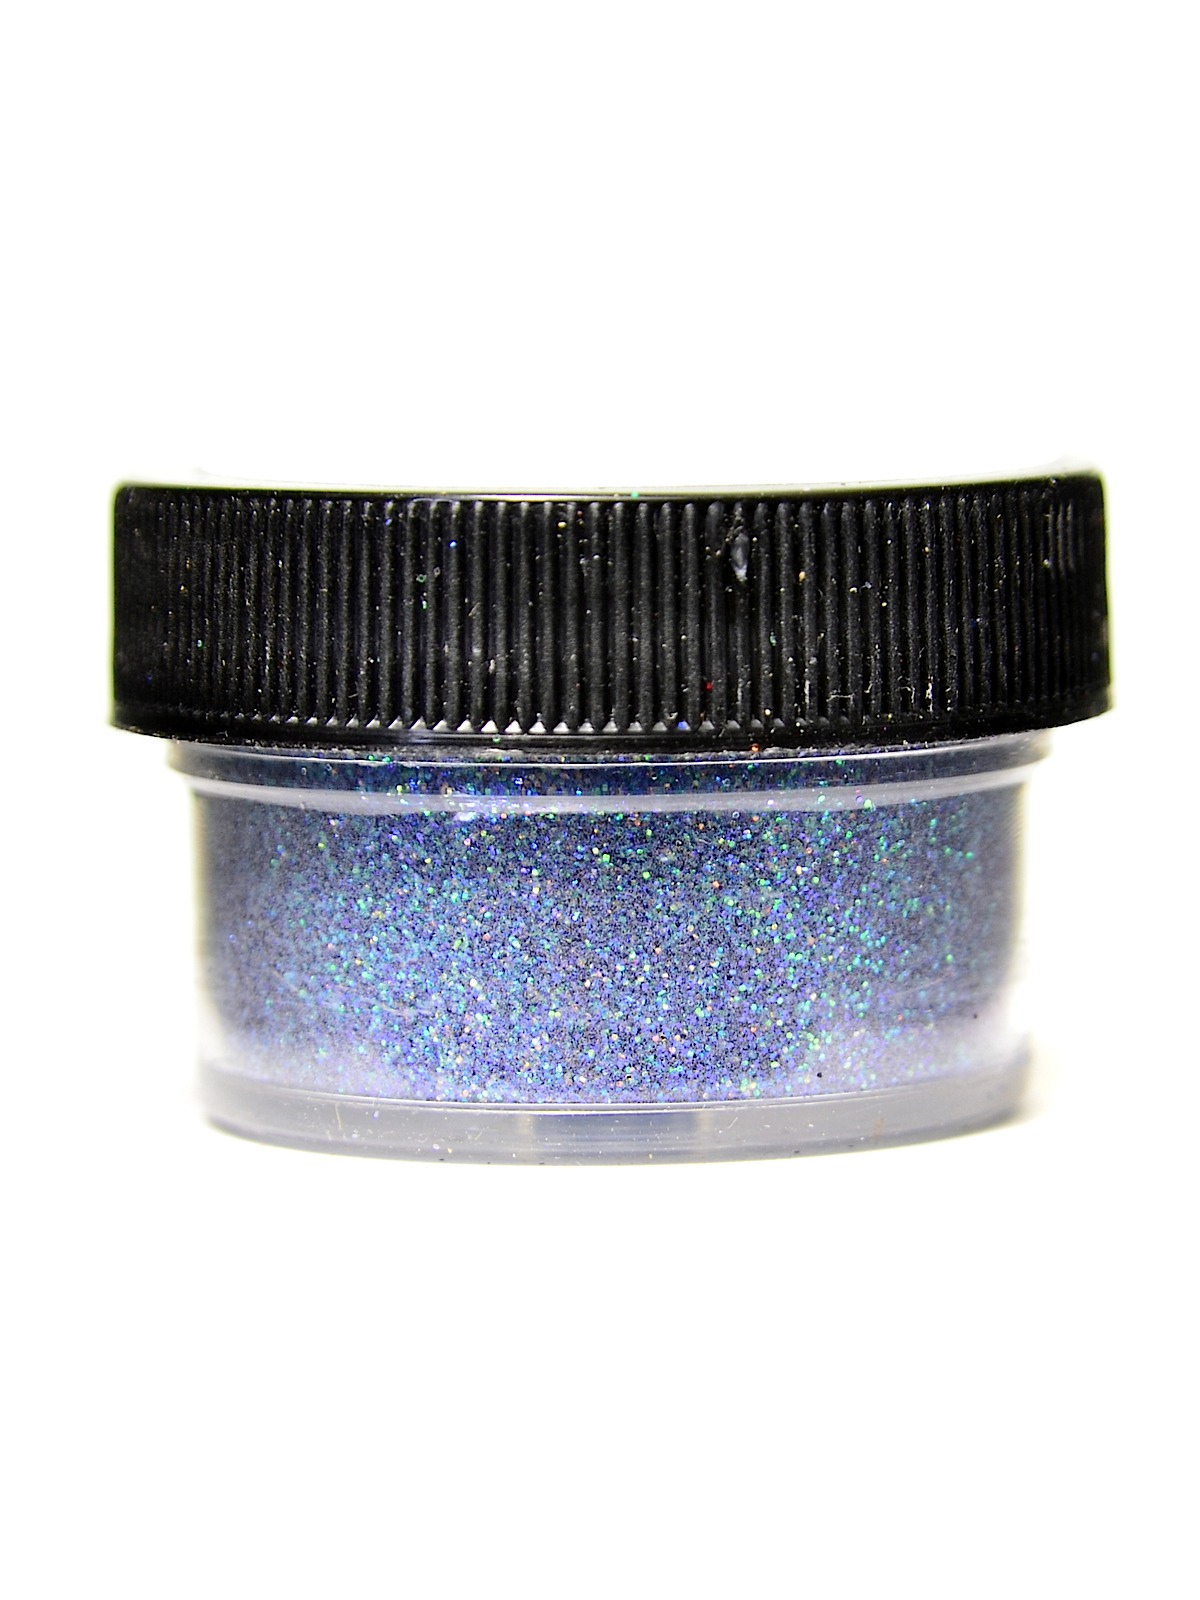 Ultrafine Transparent Glitter Blue Whale 1 2 Oz. Jar